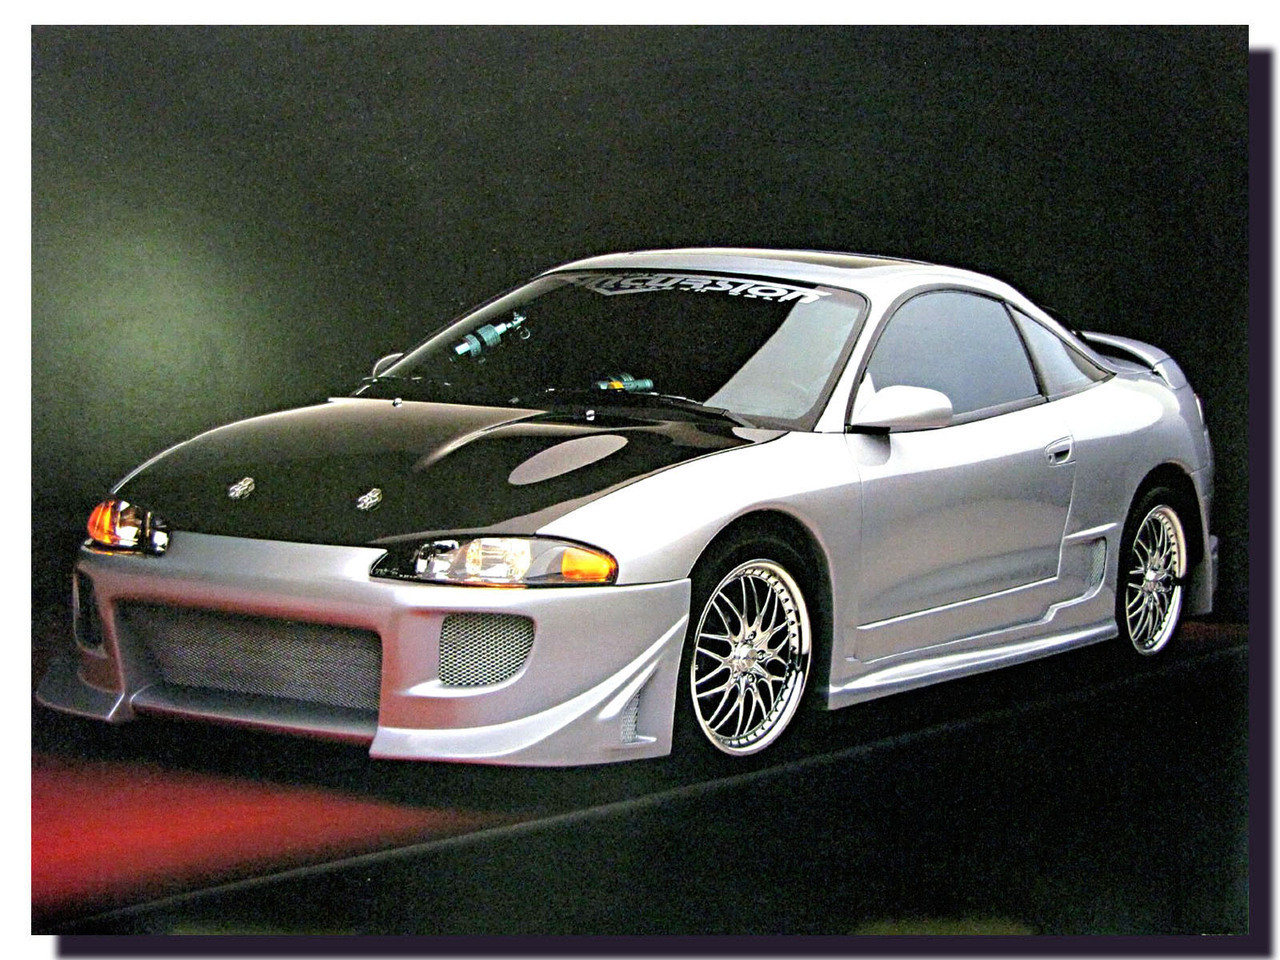 1998 mitsubishi custom modified eclipse poster car posters automotive posters sports car wall decor mitsubishi eclipse custom street racer art print poster 16x20